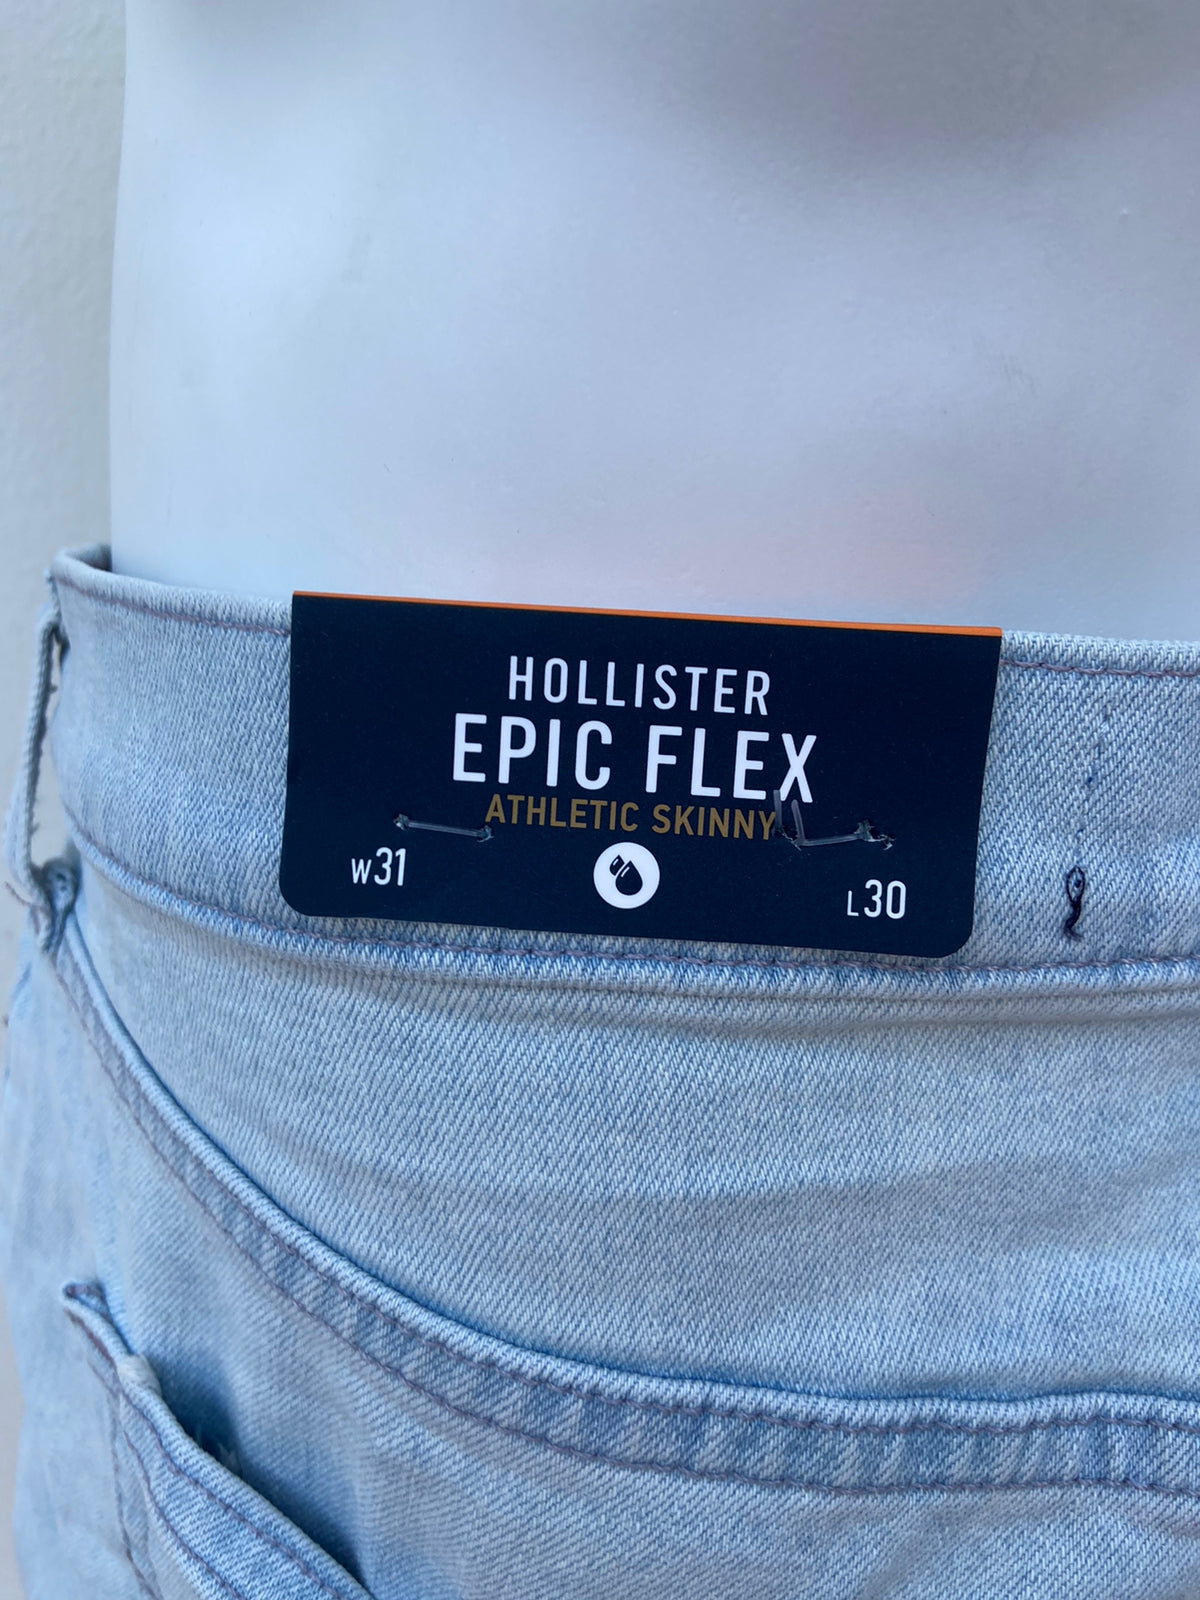 Pantalón Hollister original azul claro con pequeño rasgado EPIC FLEX ATHLETIC SKINNY